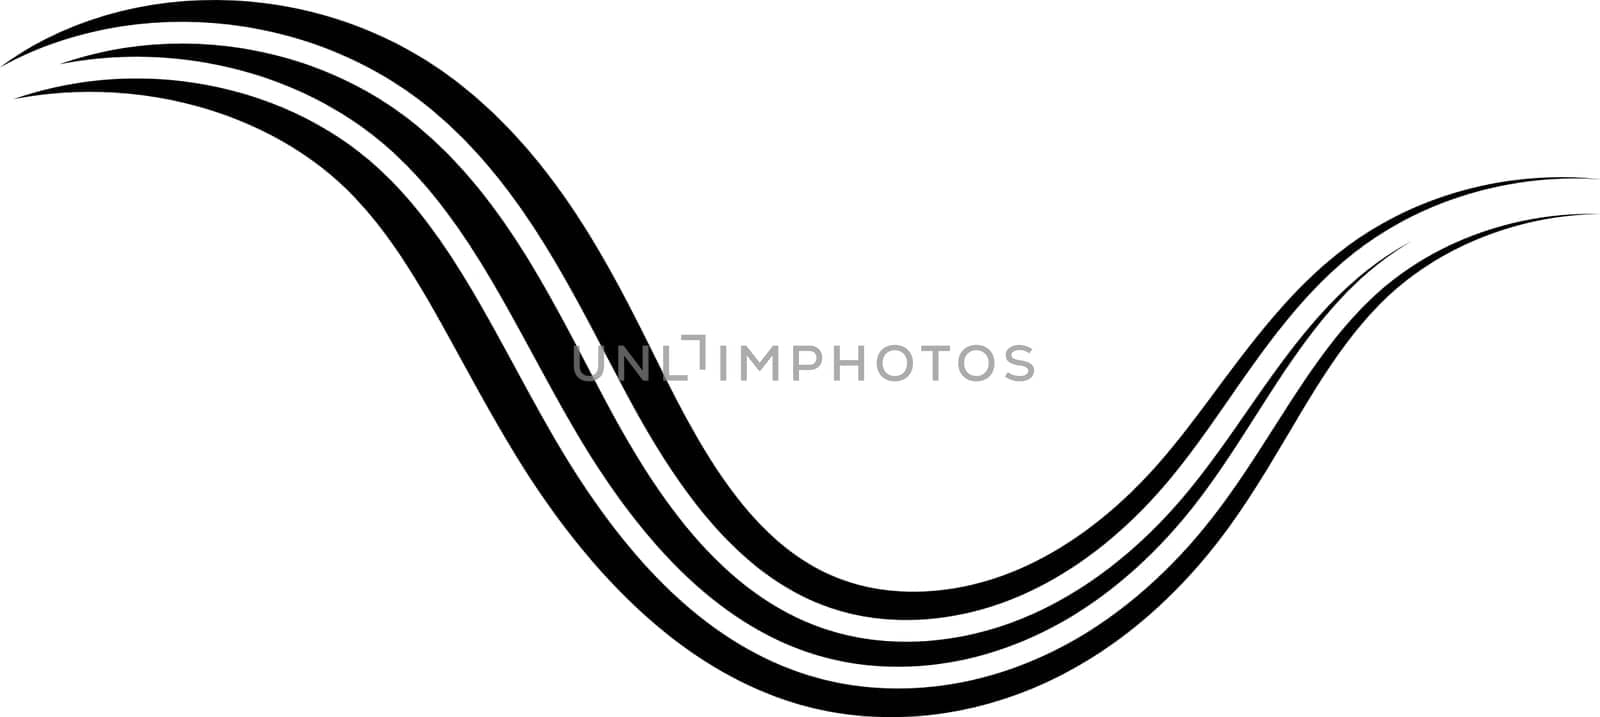 Curved graceful triple line, ribbon elegant calligraphy element gracefully line by koksikoks